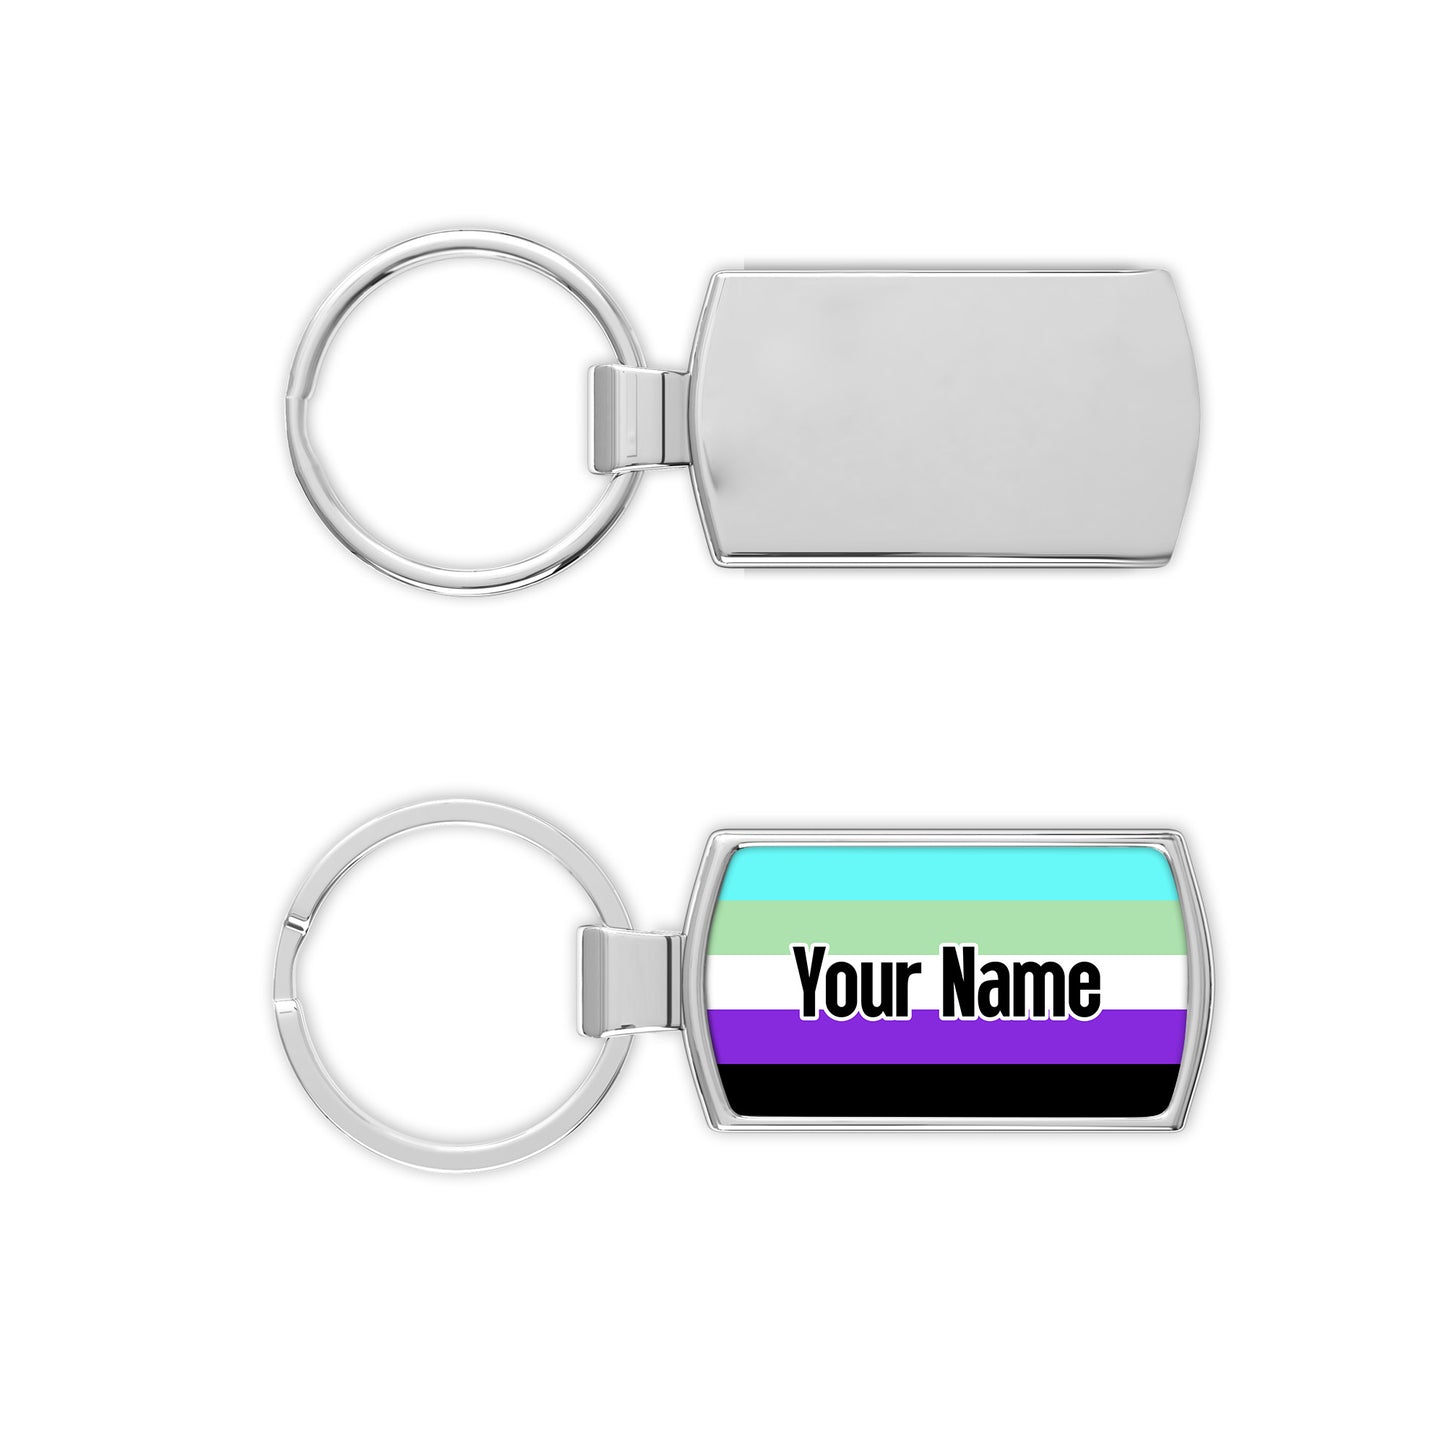 Abrogender pride flag metal keyring personalised with your name